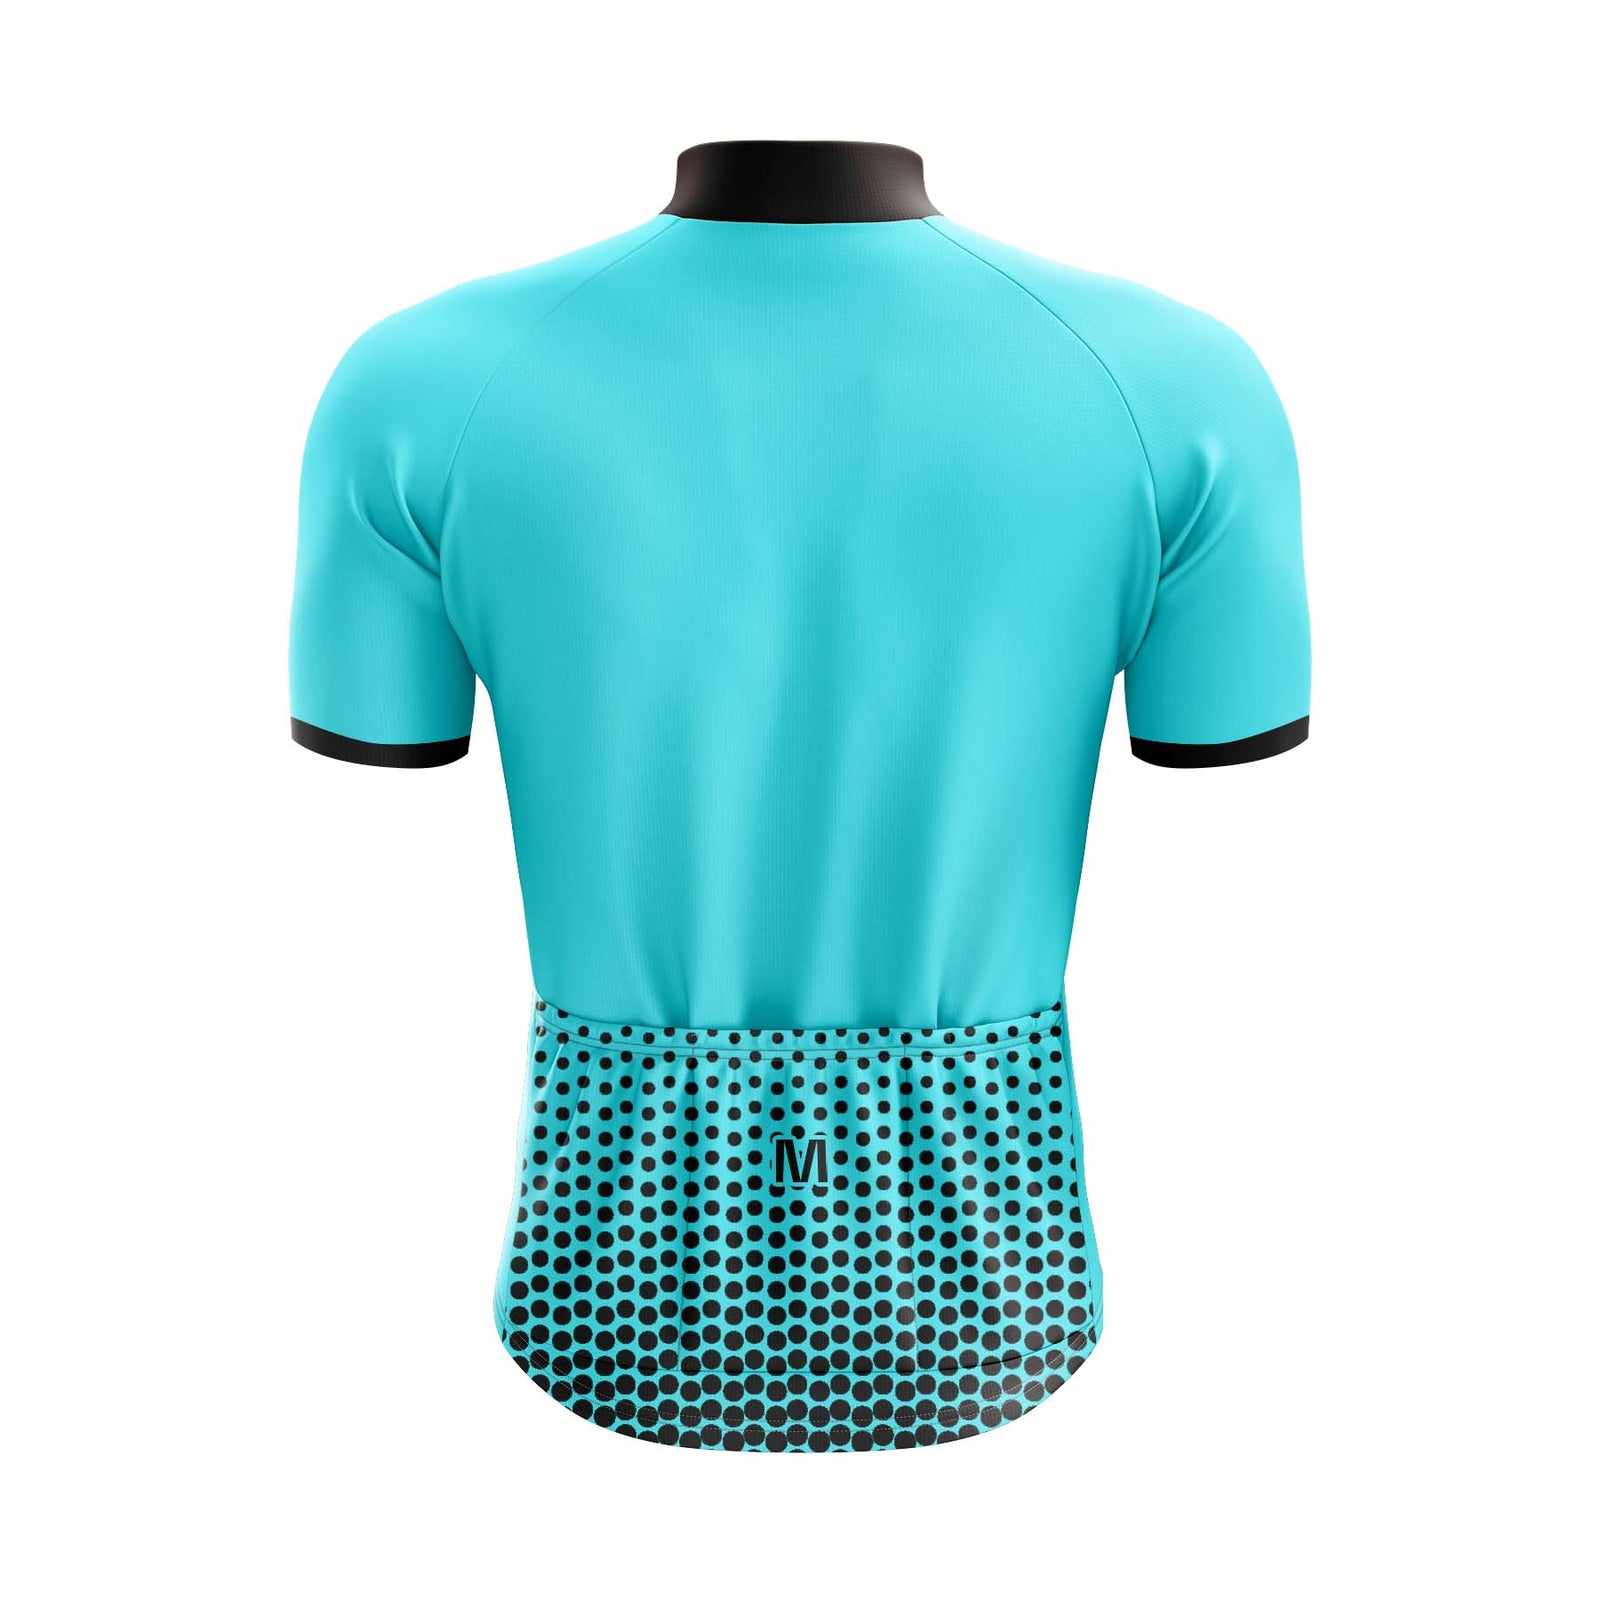 Montella Cycling Cycling Kit Men's Aqua Blue Ride Cycling Jersey or Bib Shorts